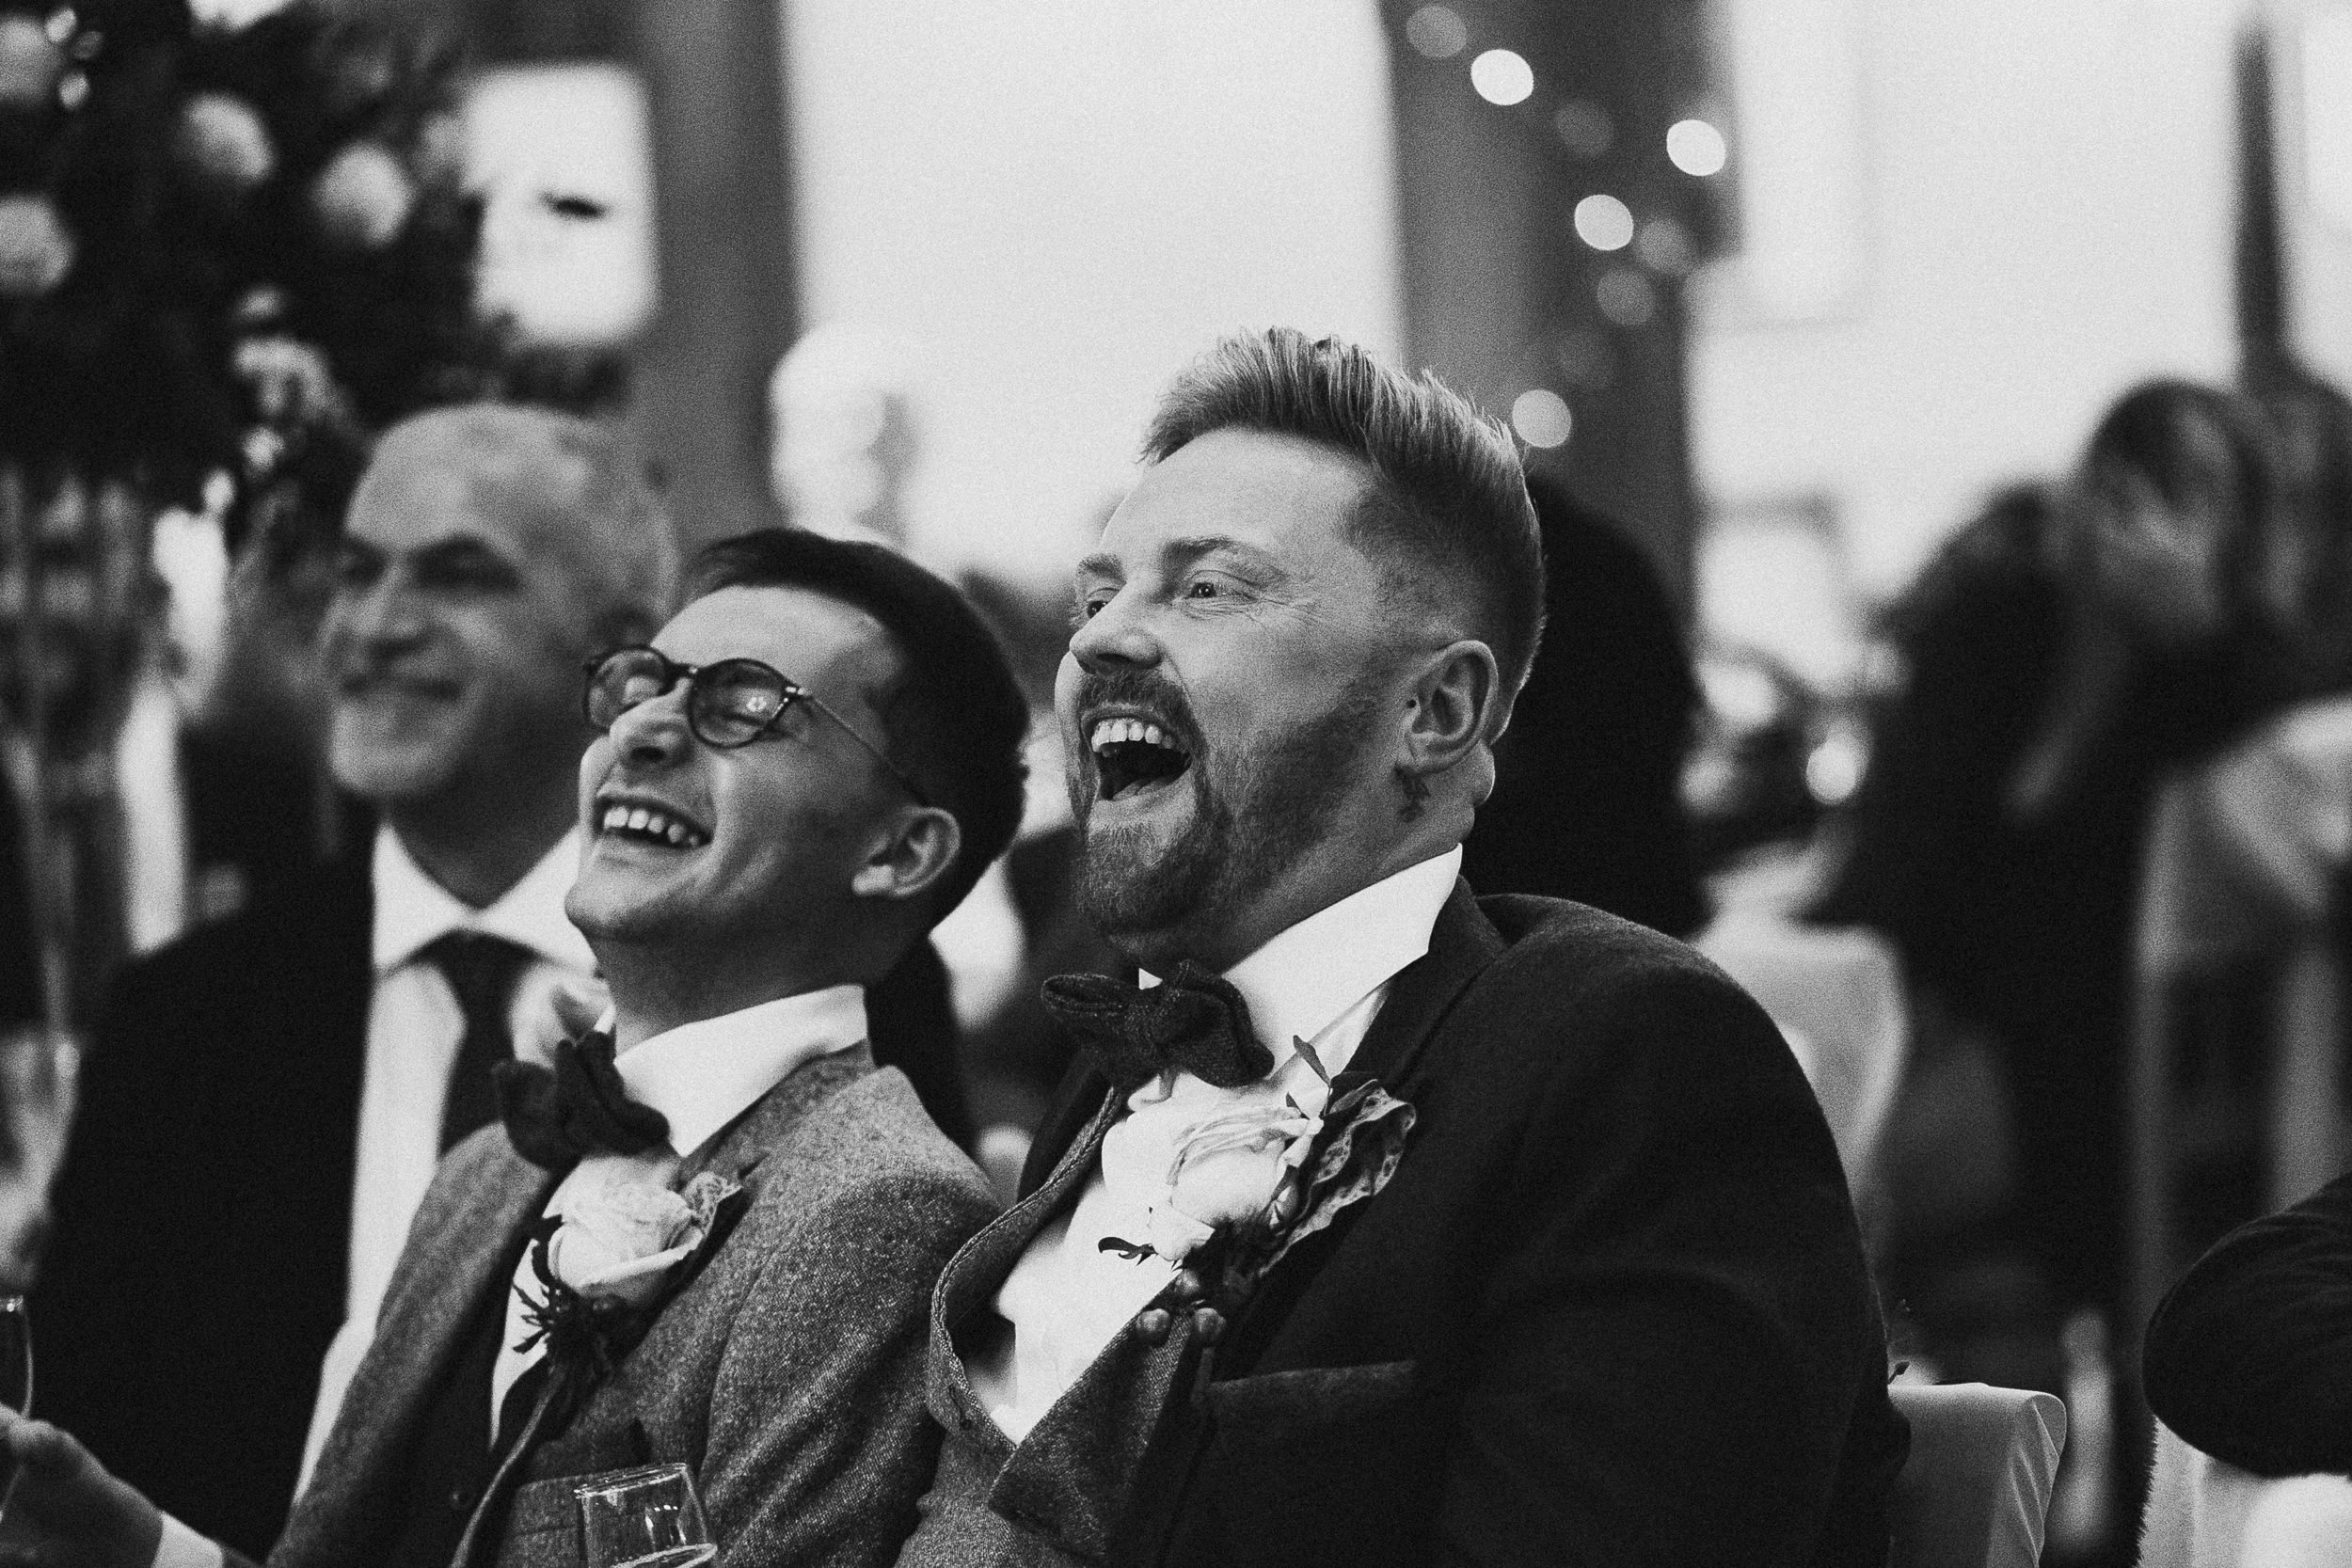  king arthur gower swansea relaxed fun gay wedding photography 